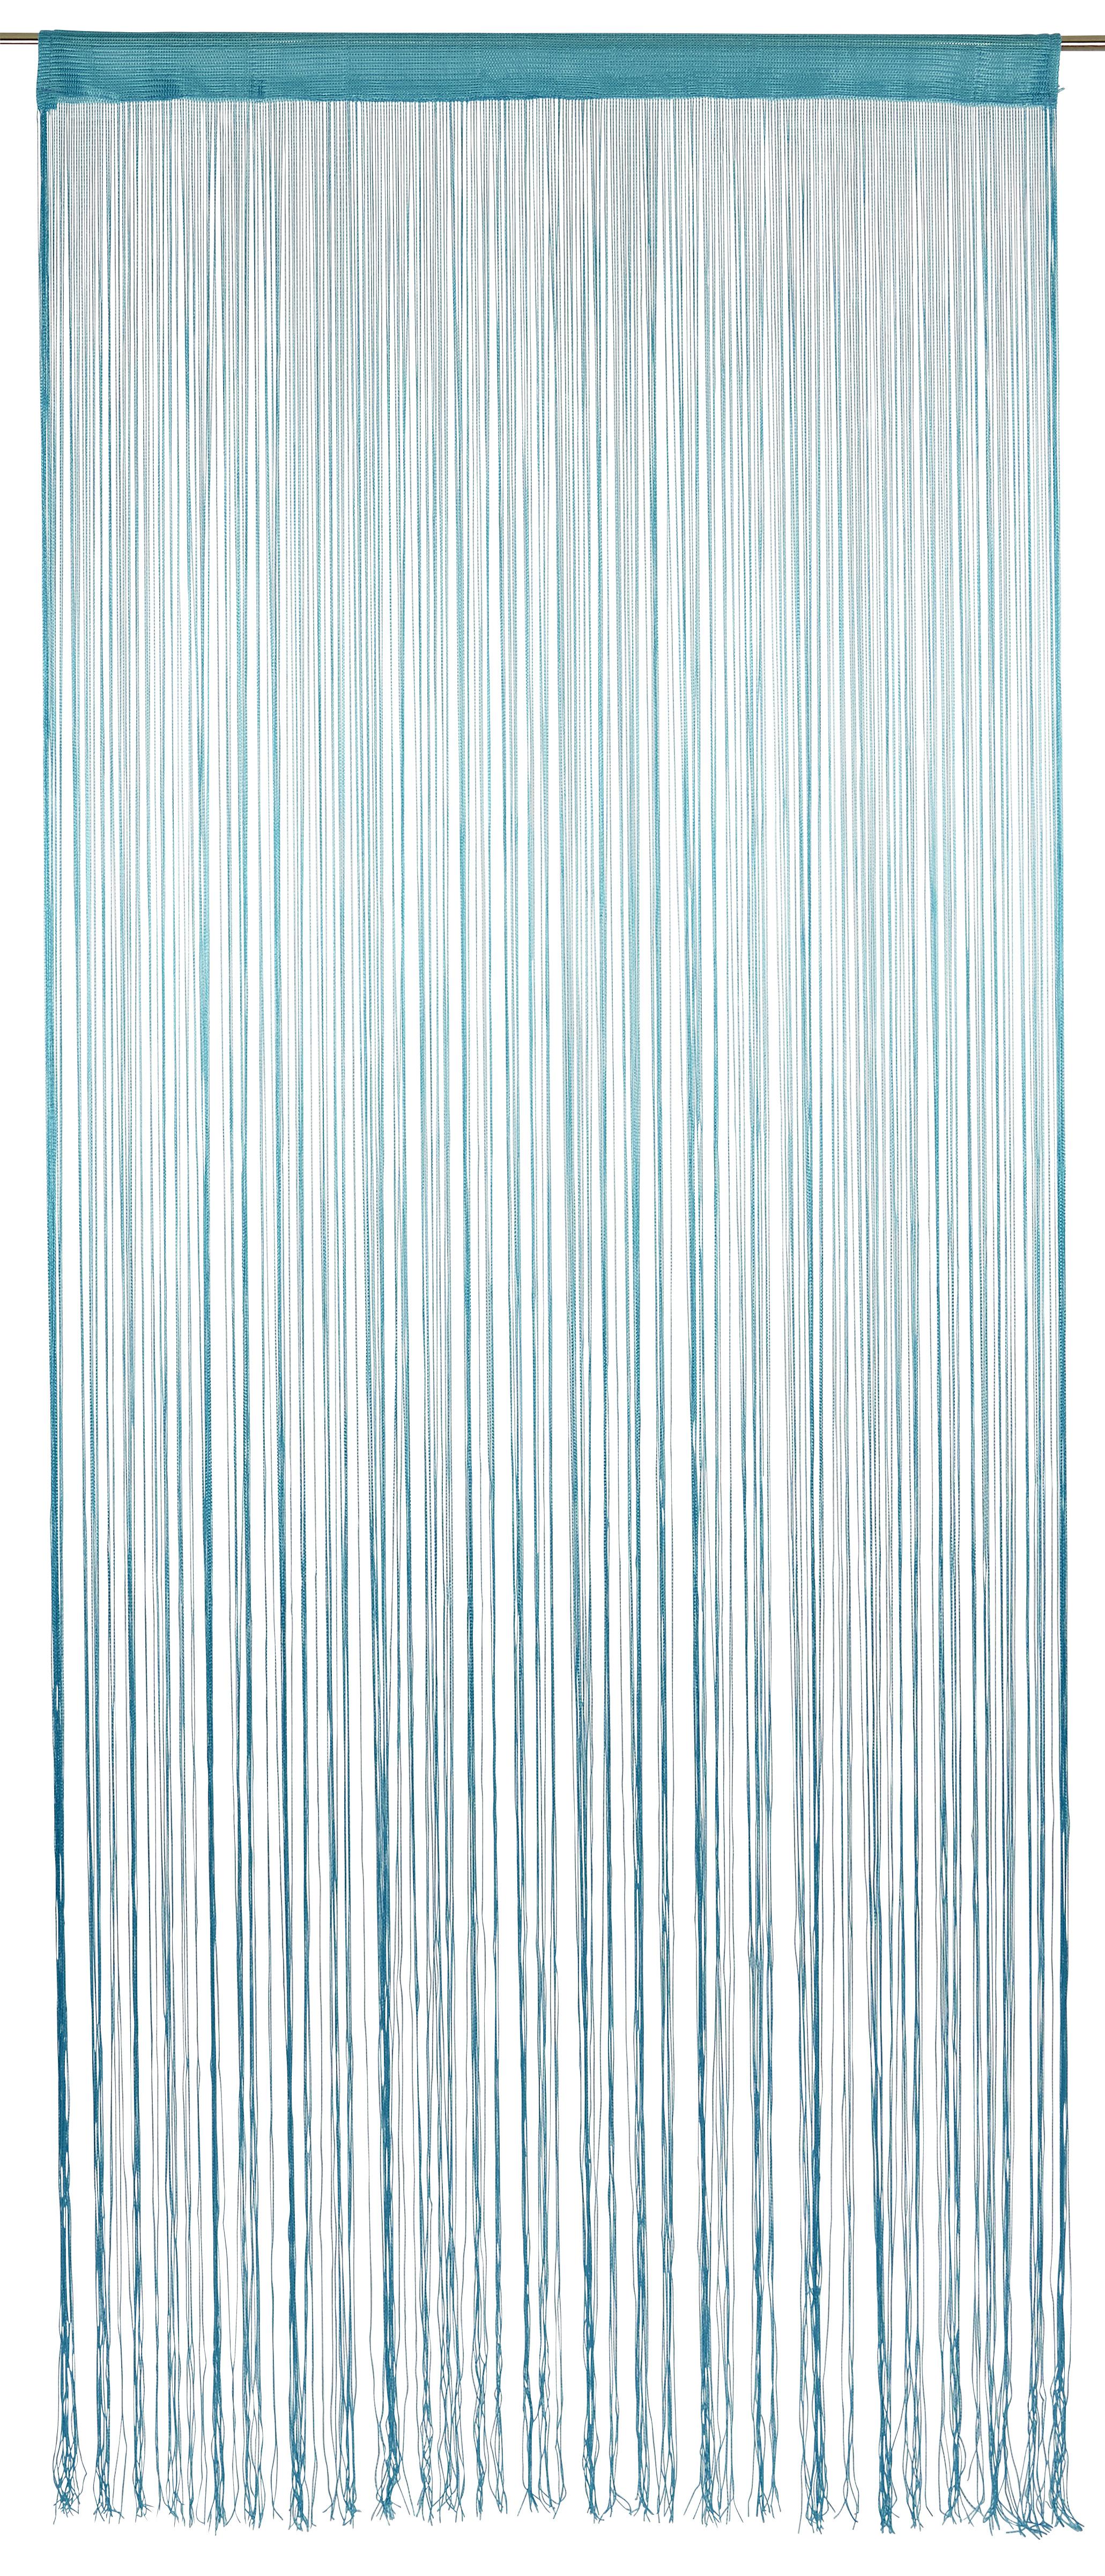 Fadenvorhang Stangendurchzug Marietta B: 90cm, Aqua - Hellblau, KONVENTIONELL, Textil (90/245cm) - Ombra